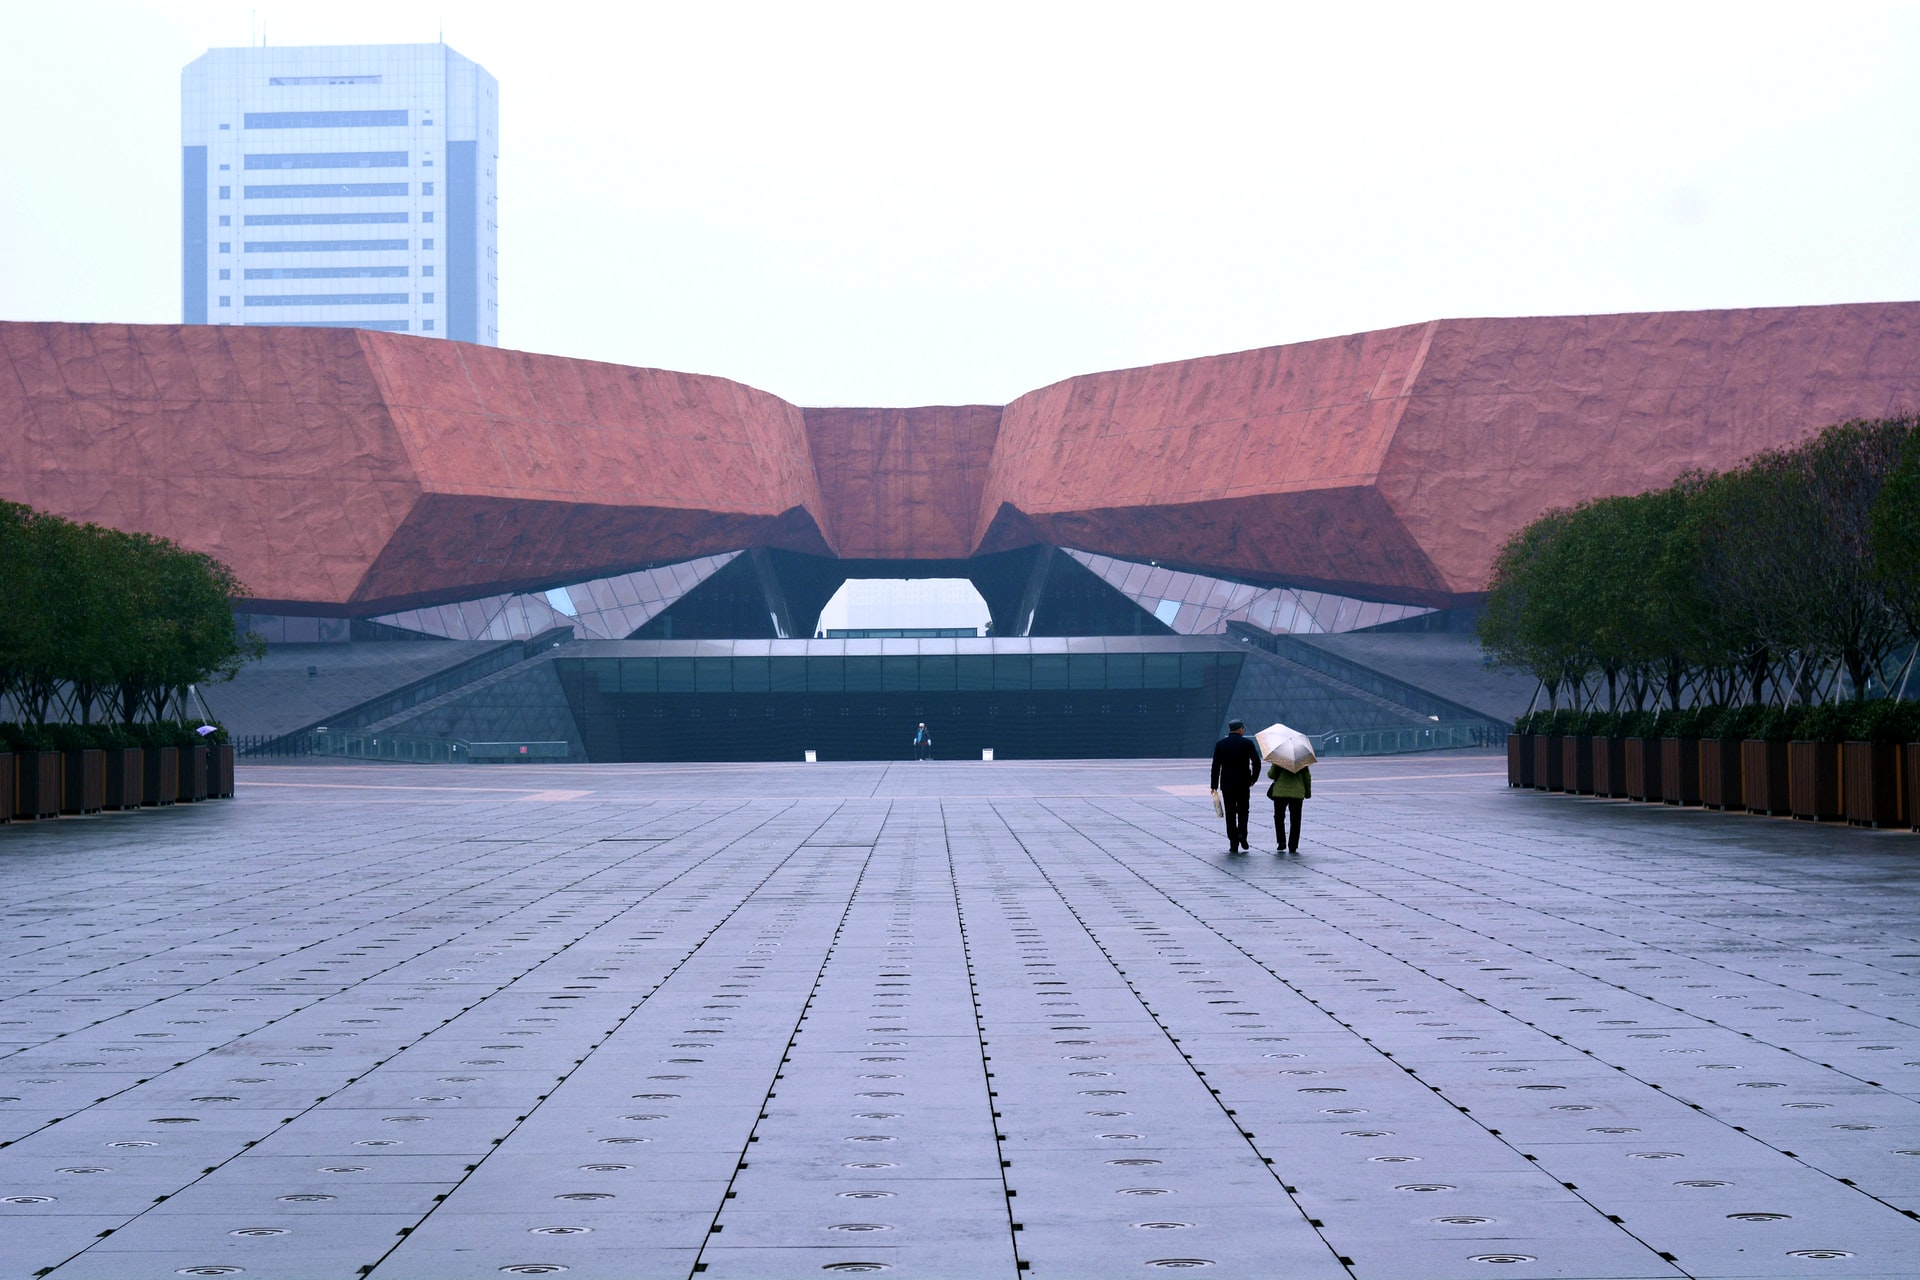 Wuhan City Centre, Wuhan, China. Credit: Laurentiu Morariu on Unsplash